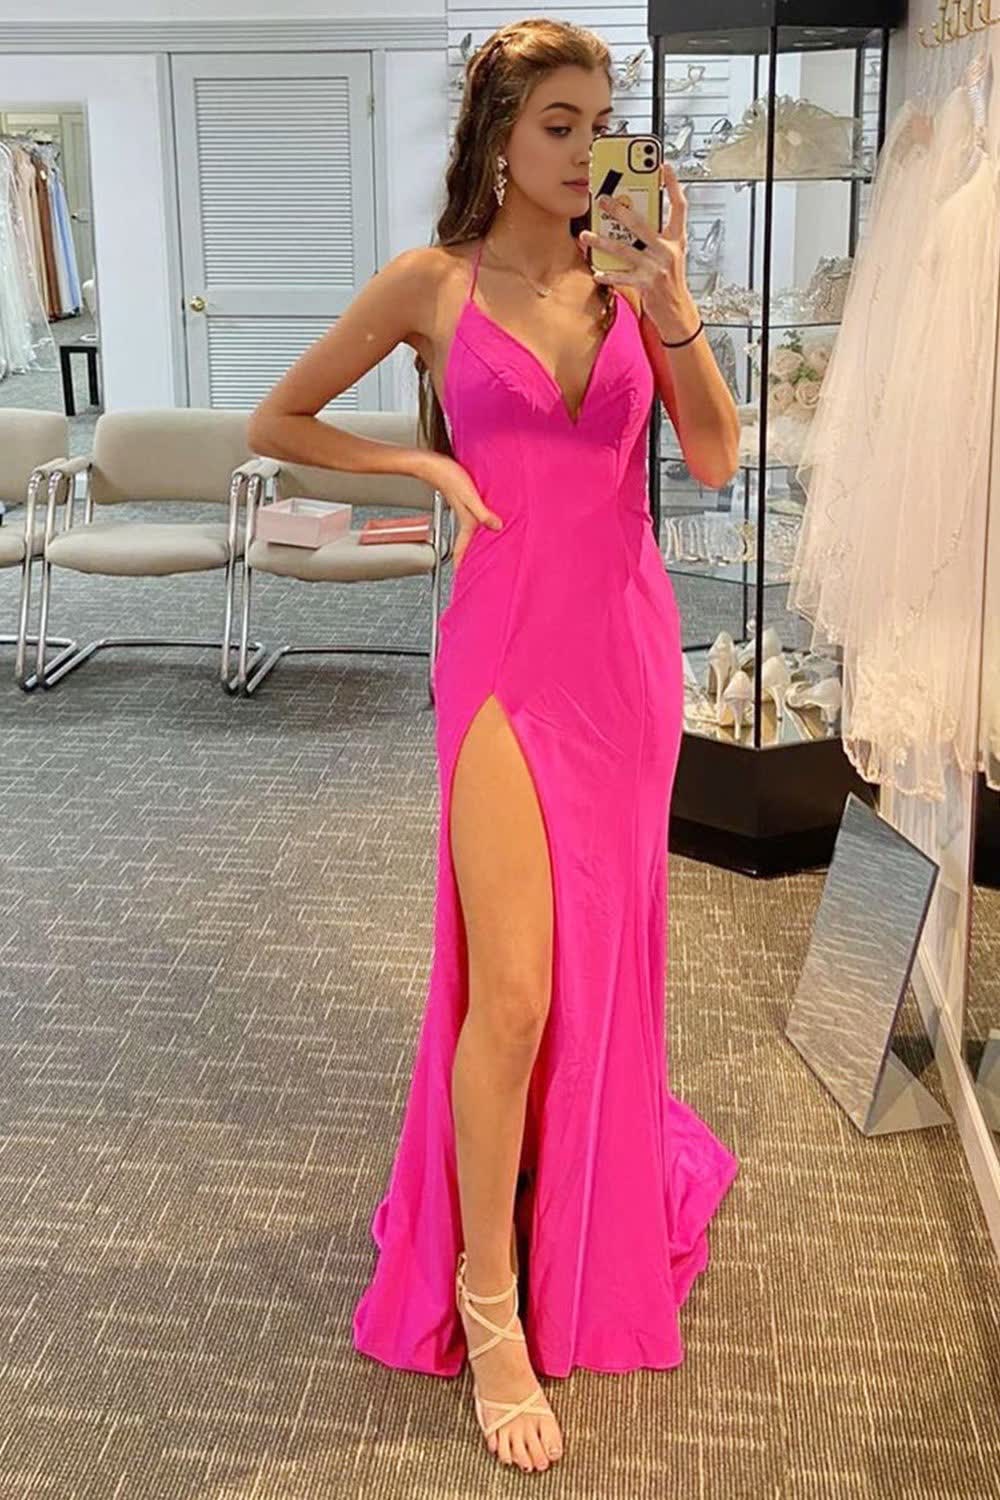 Beading Hot Pink Halter Prom Dress with Slit